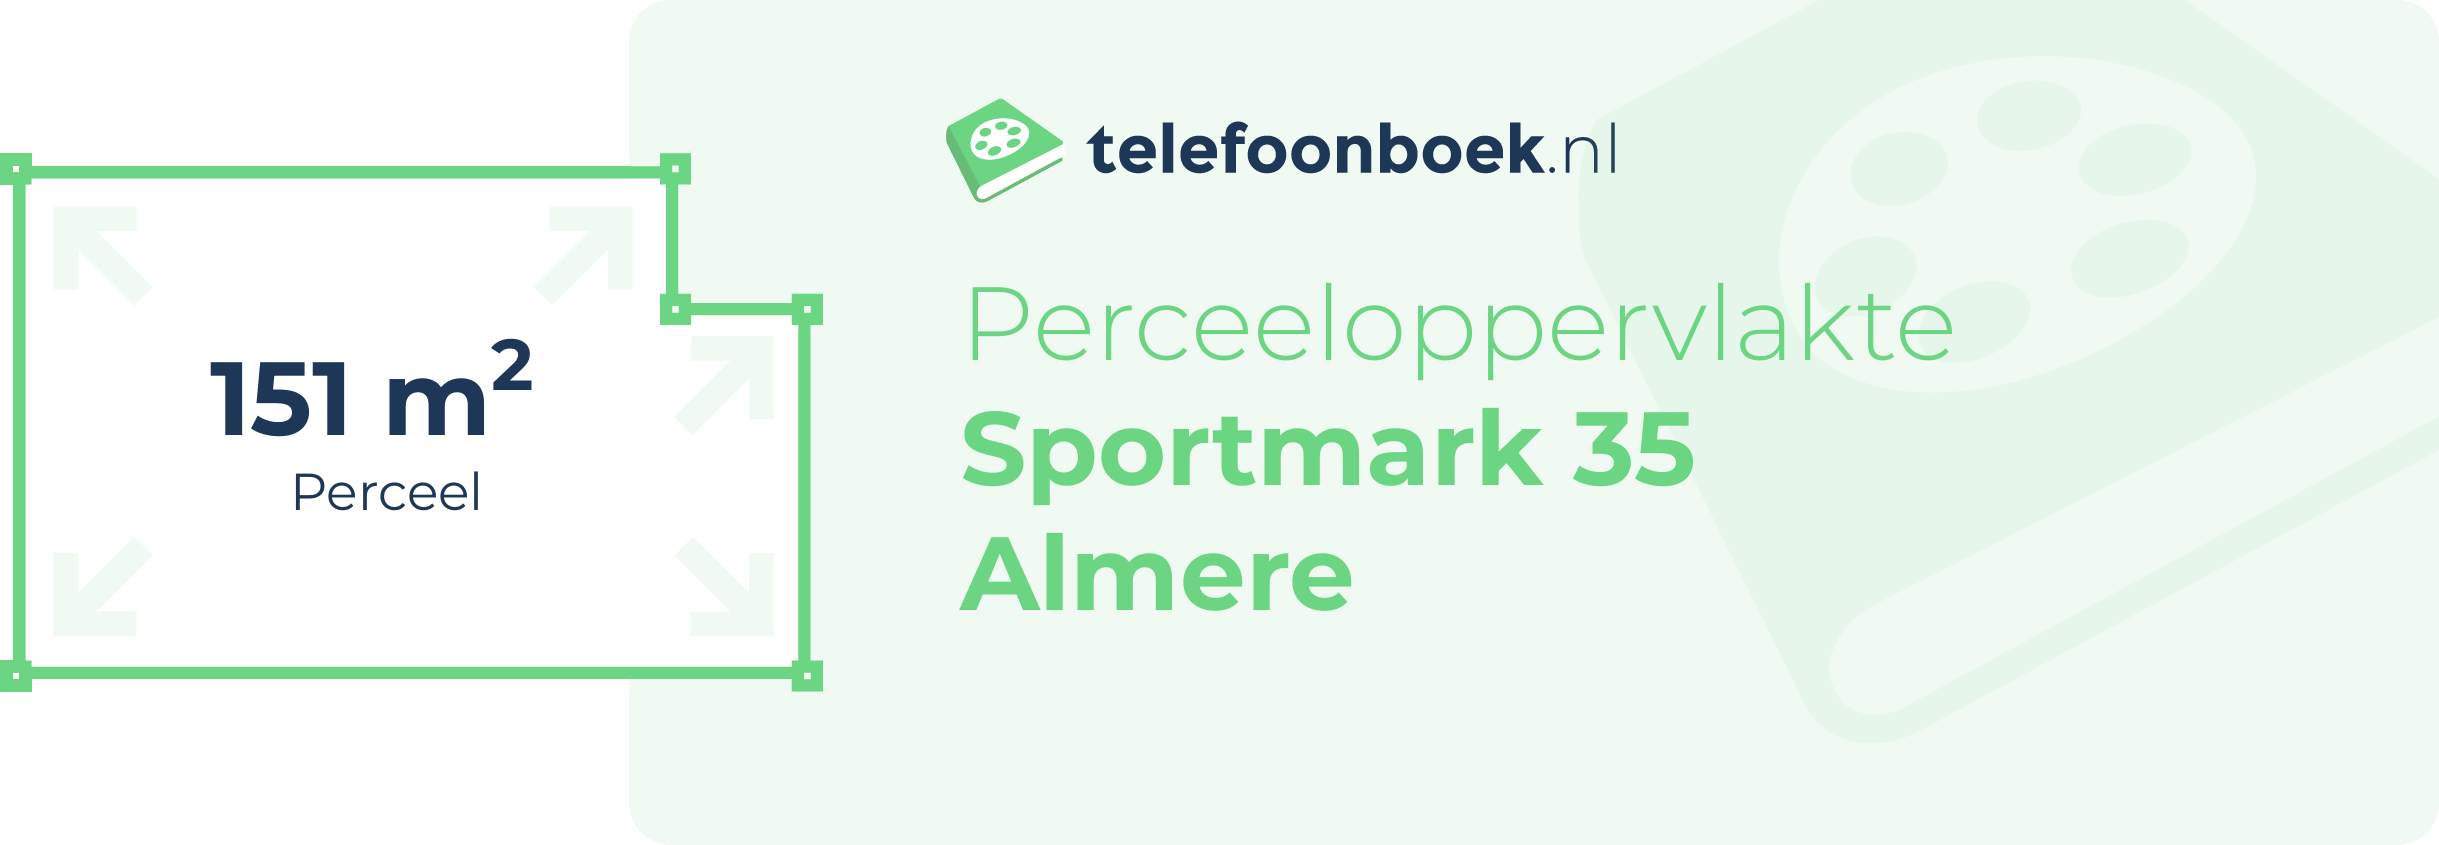 Perceeloppervlakte Sportmark 35 Almere